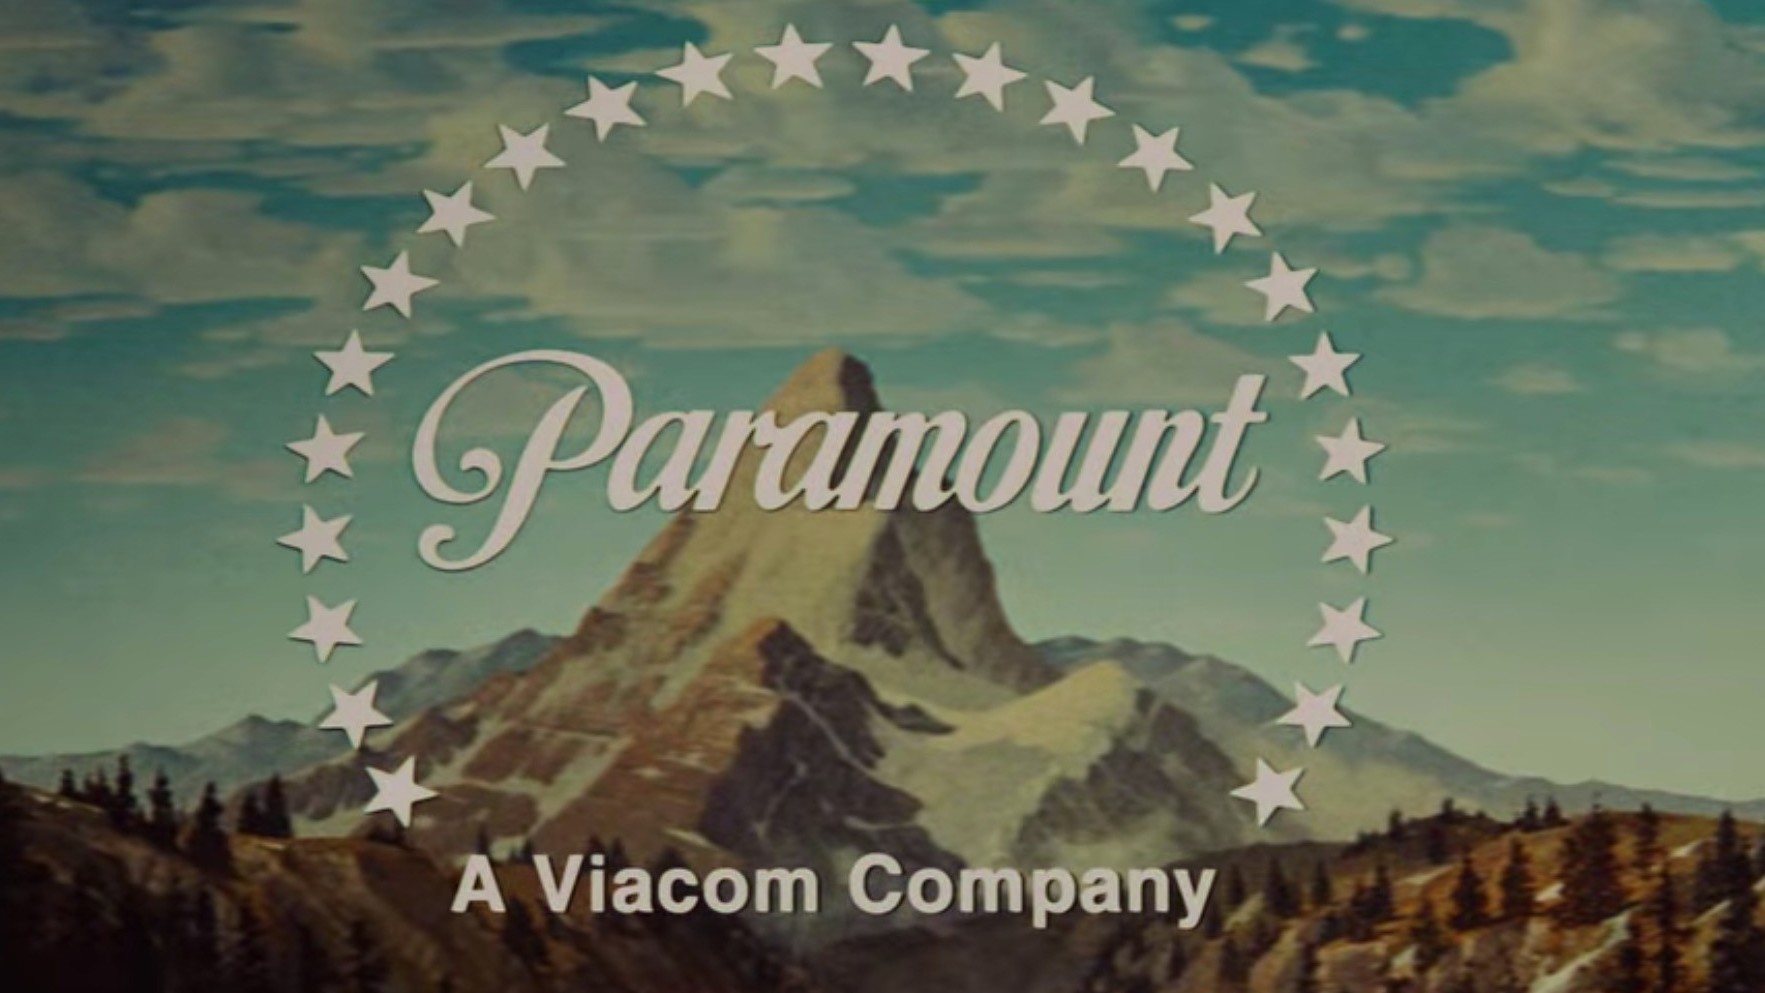 The old-school Paramount logo from Crystal Skull. (Screenshot: Lucasfilm)